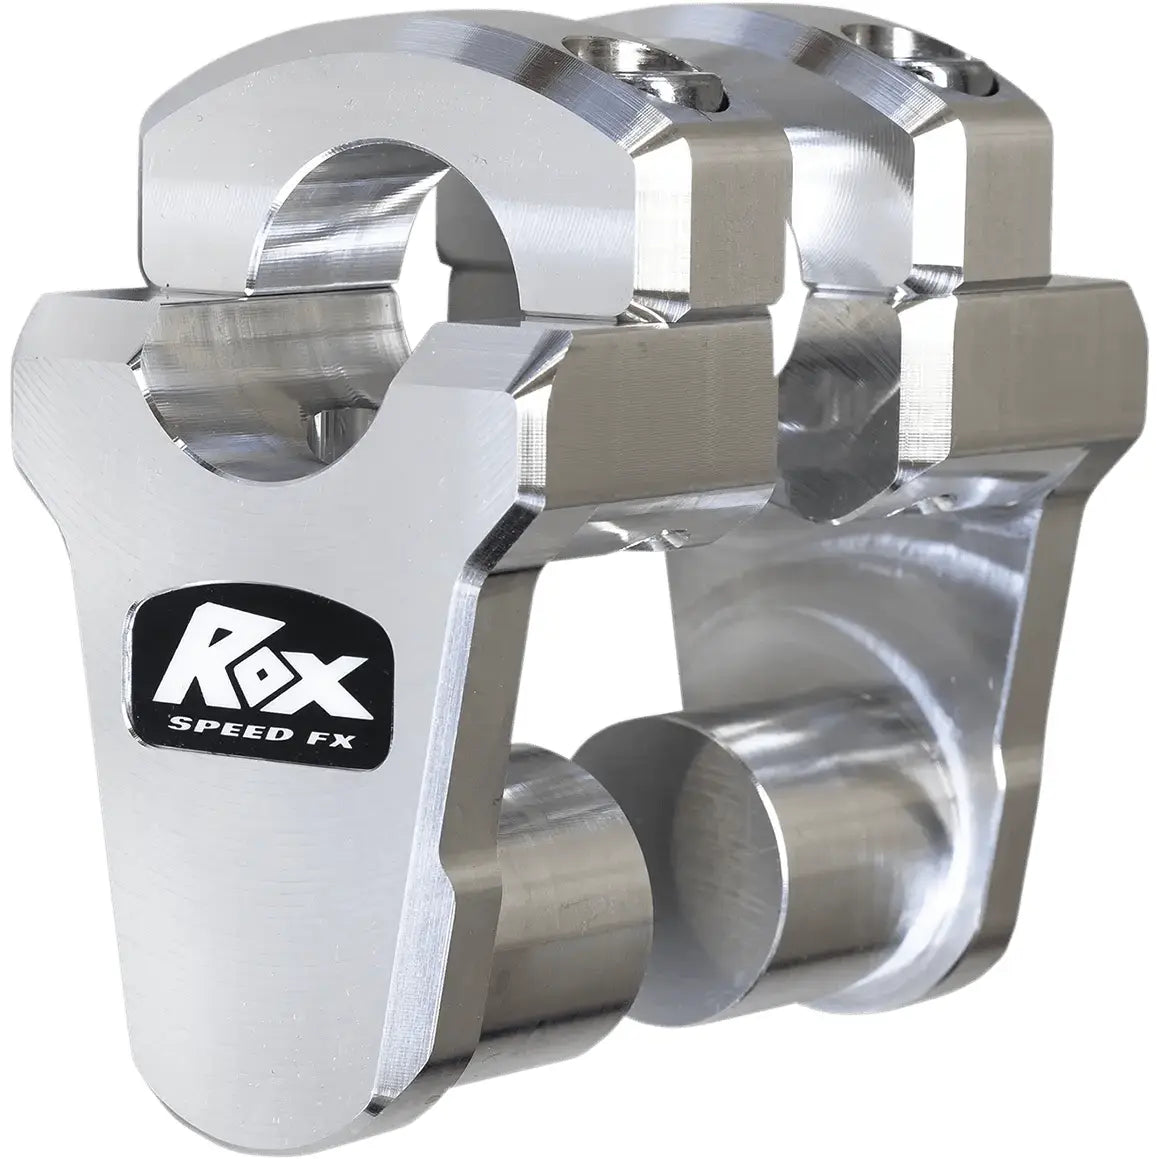 Rox Speed FX rehausse 51mm pour guidon de 28mm 1R-P2PP - EdTools